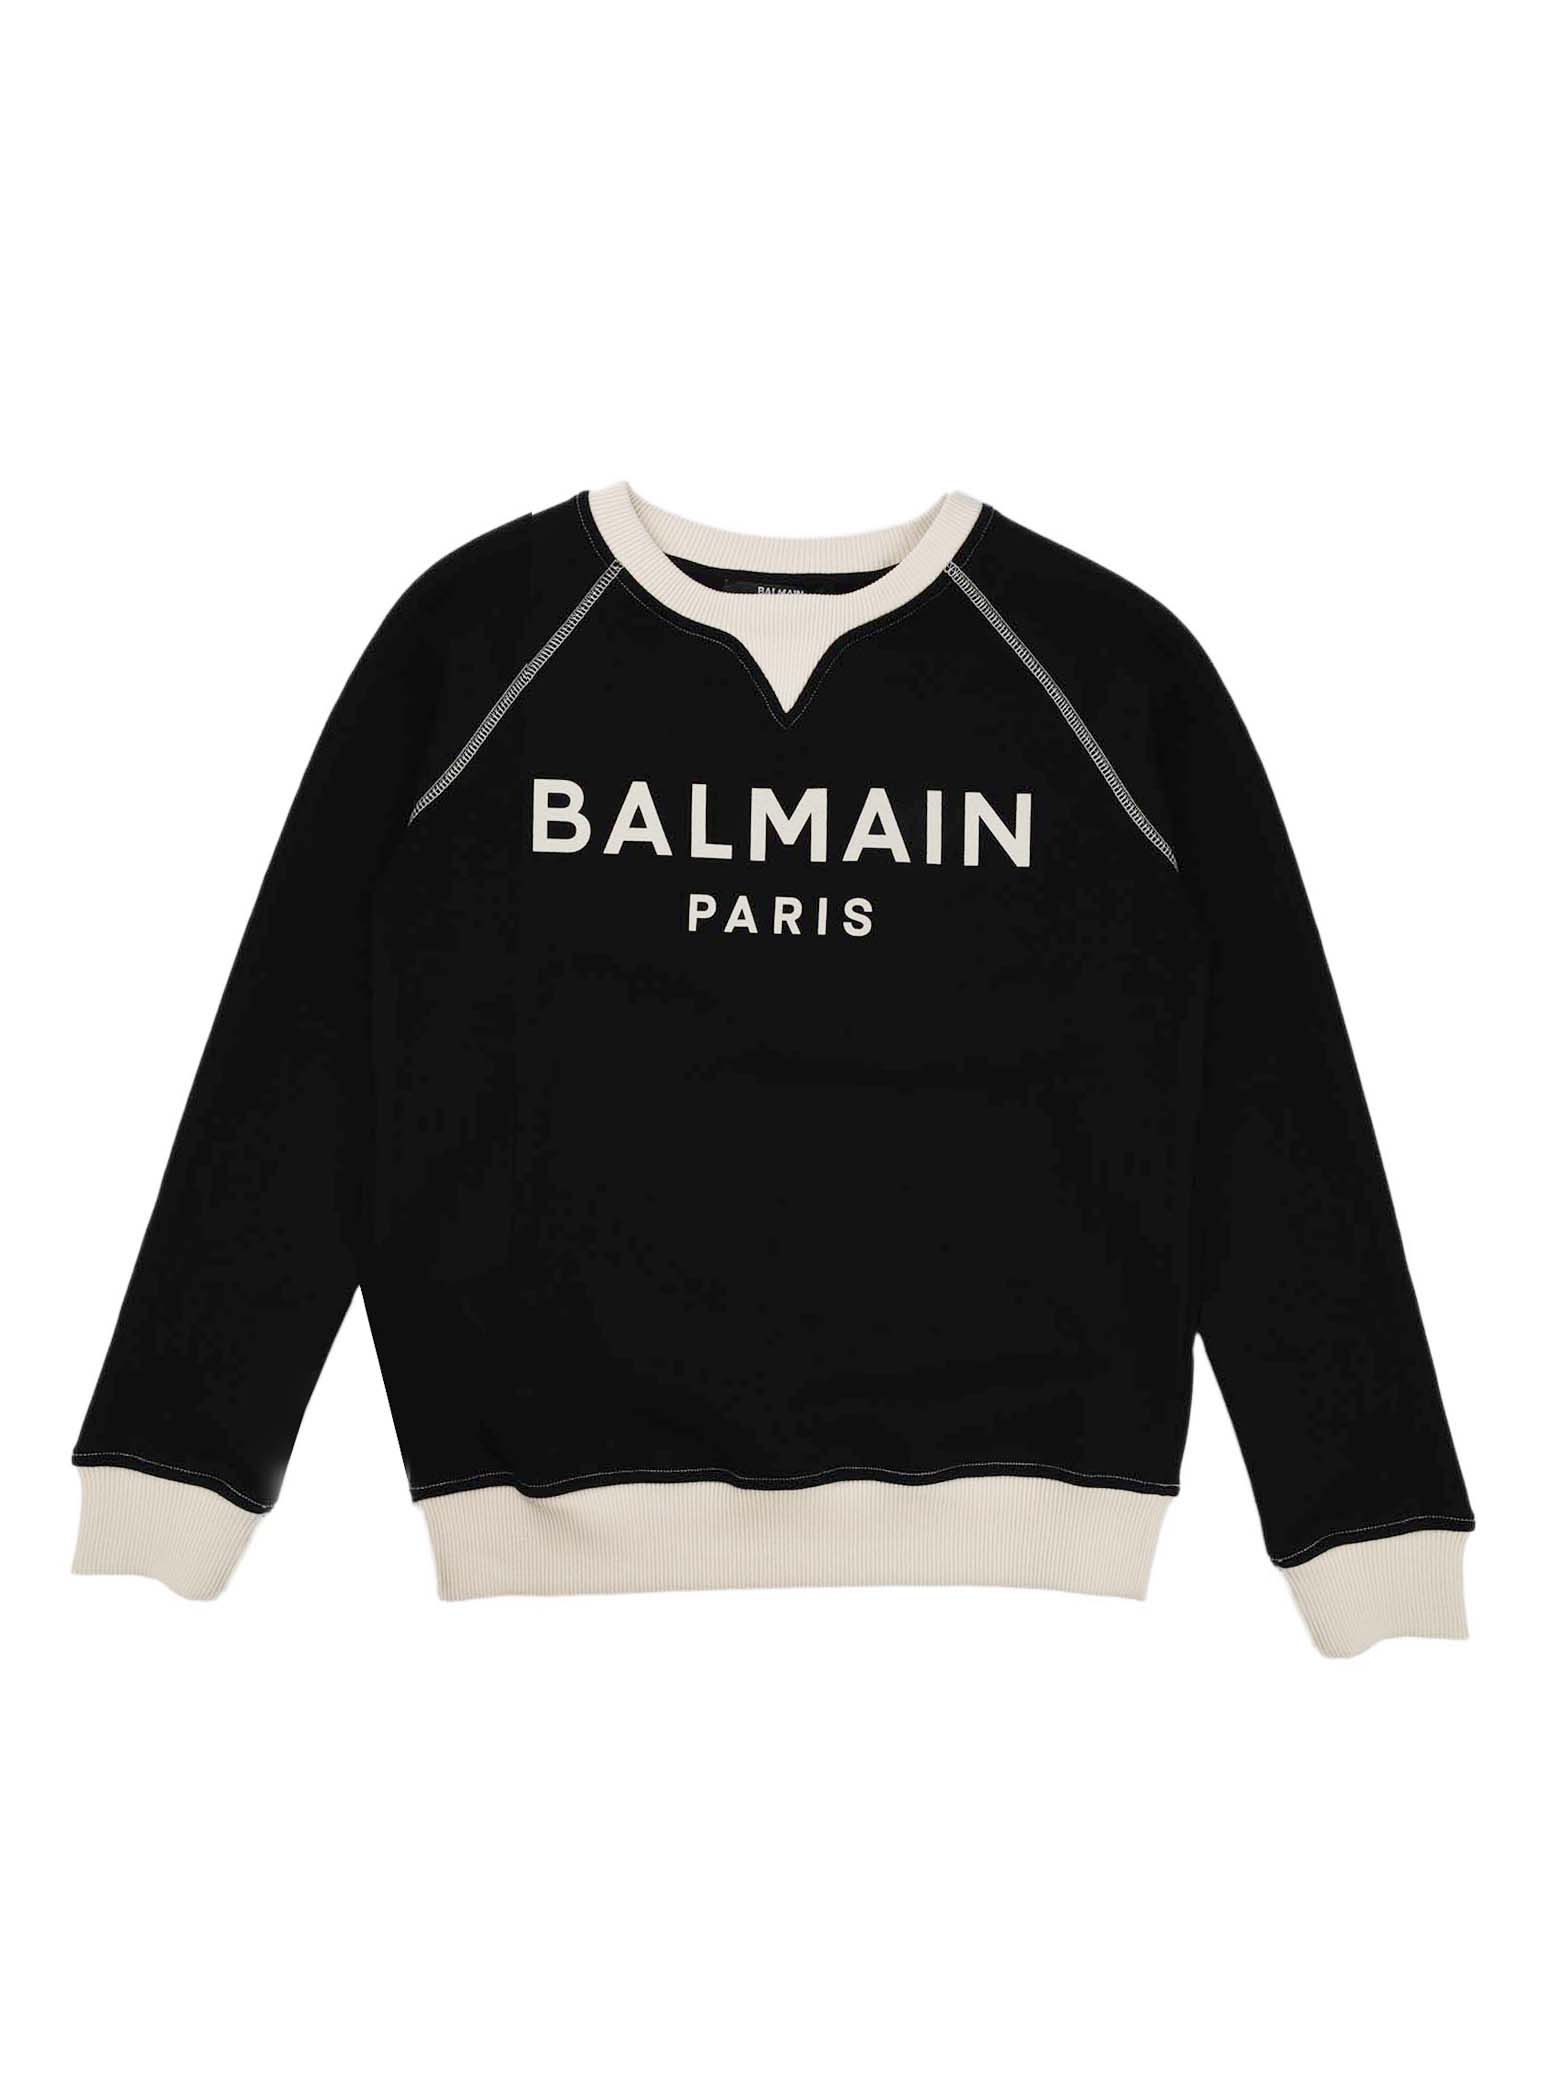 Balmain Black Sweatshirt With Ivory Profiles